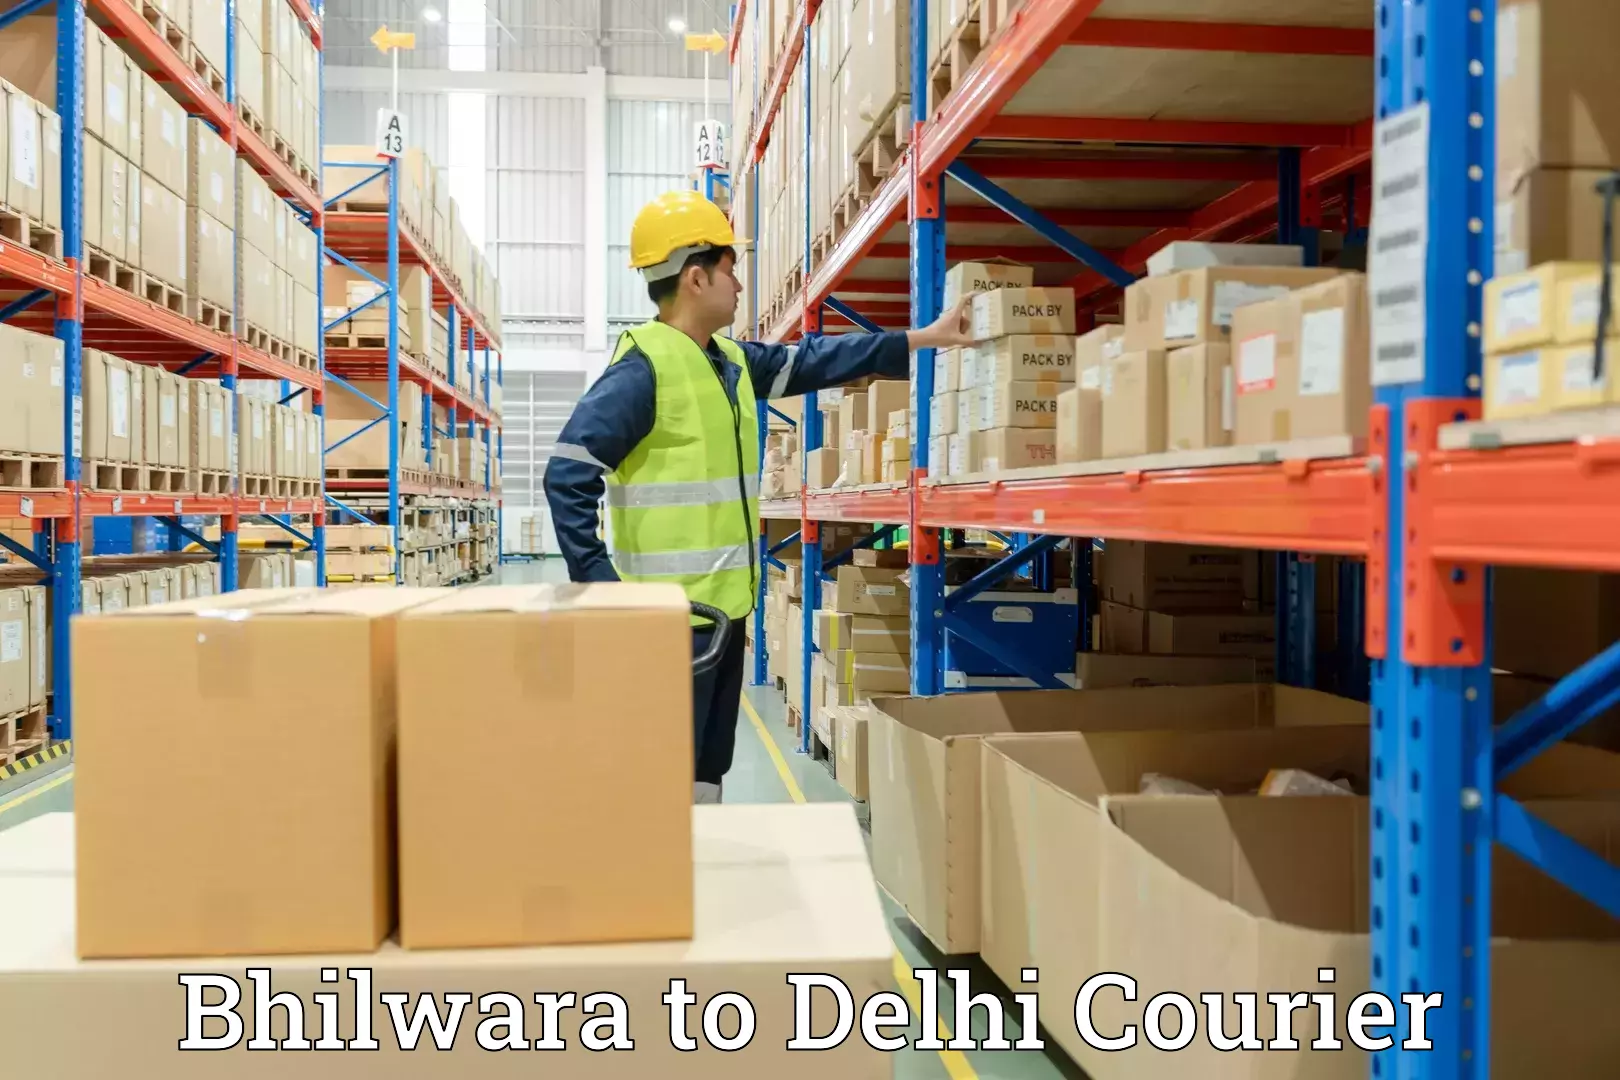 Furniture moving experts Bhilwara to Delhi